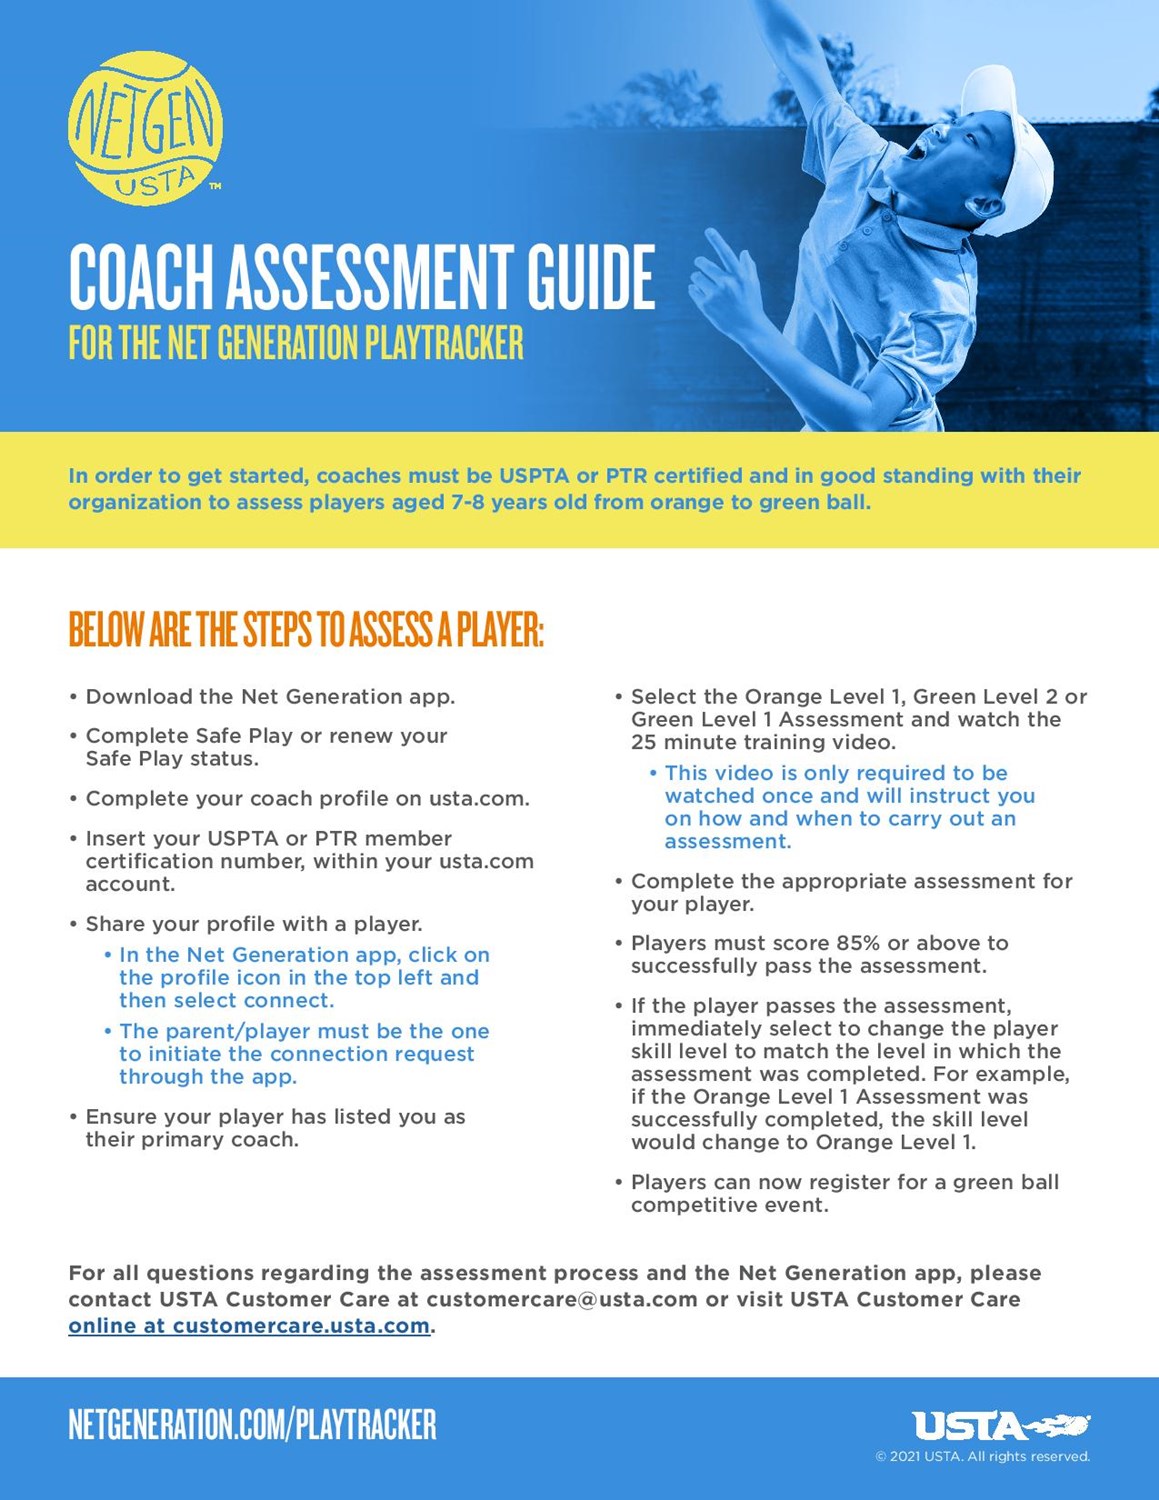 Coach Assessment Guides